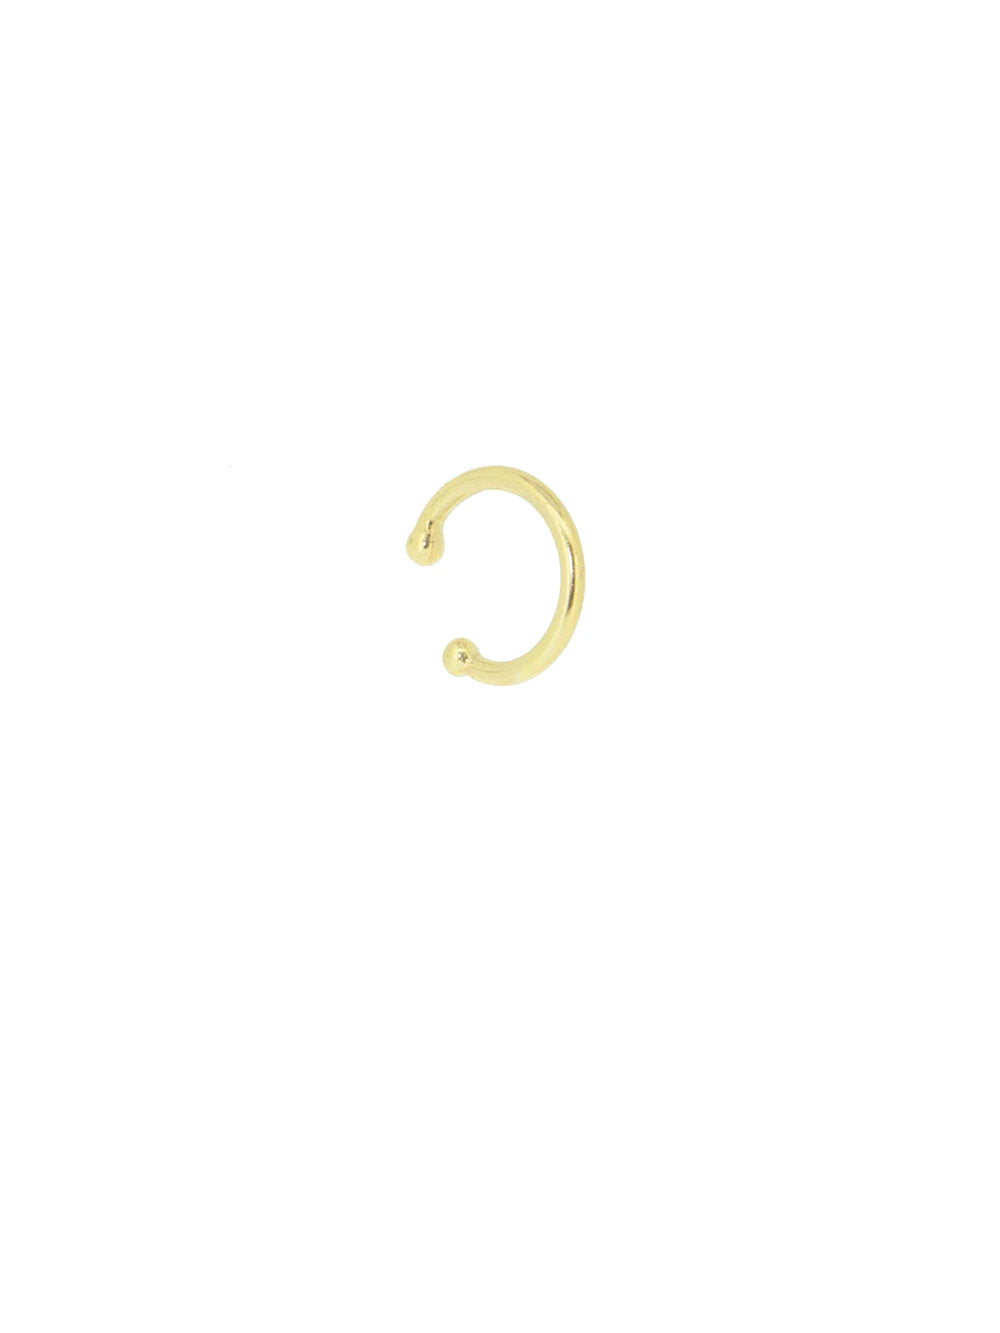 MOONLIGHT CUFF Earring | Goldplated